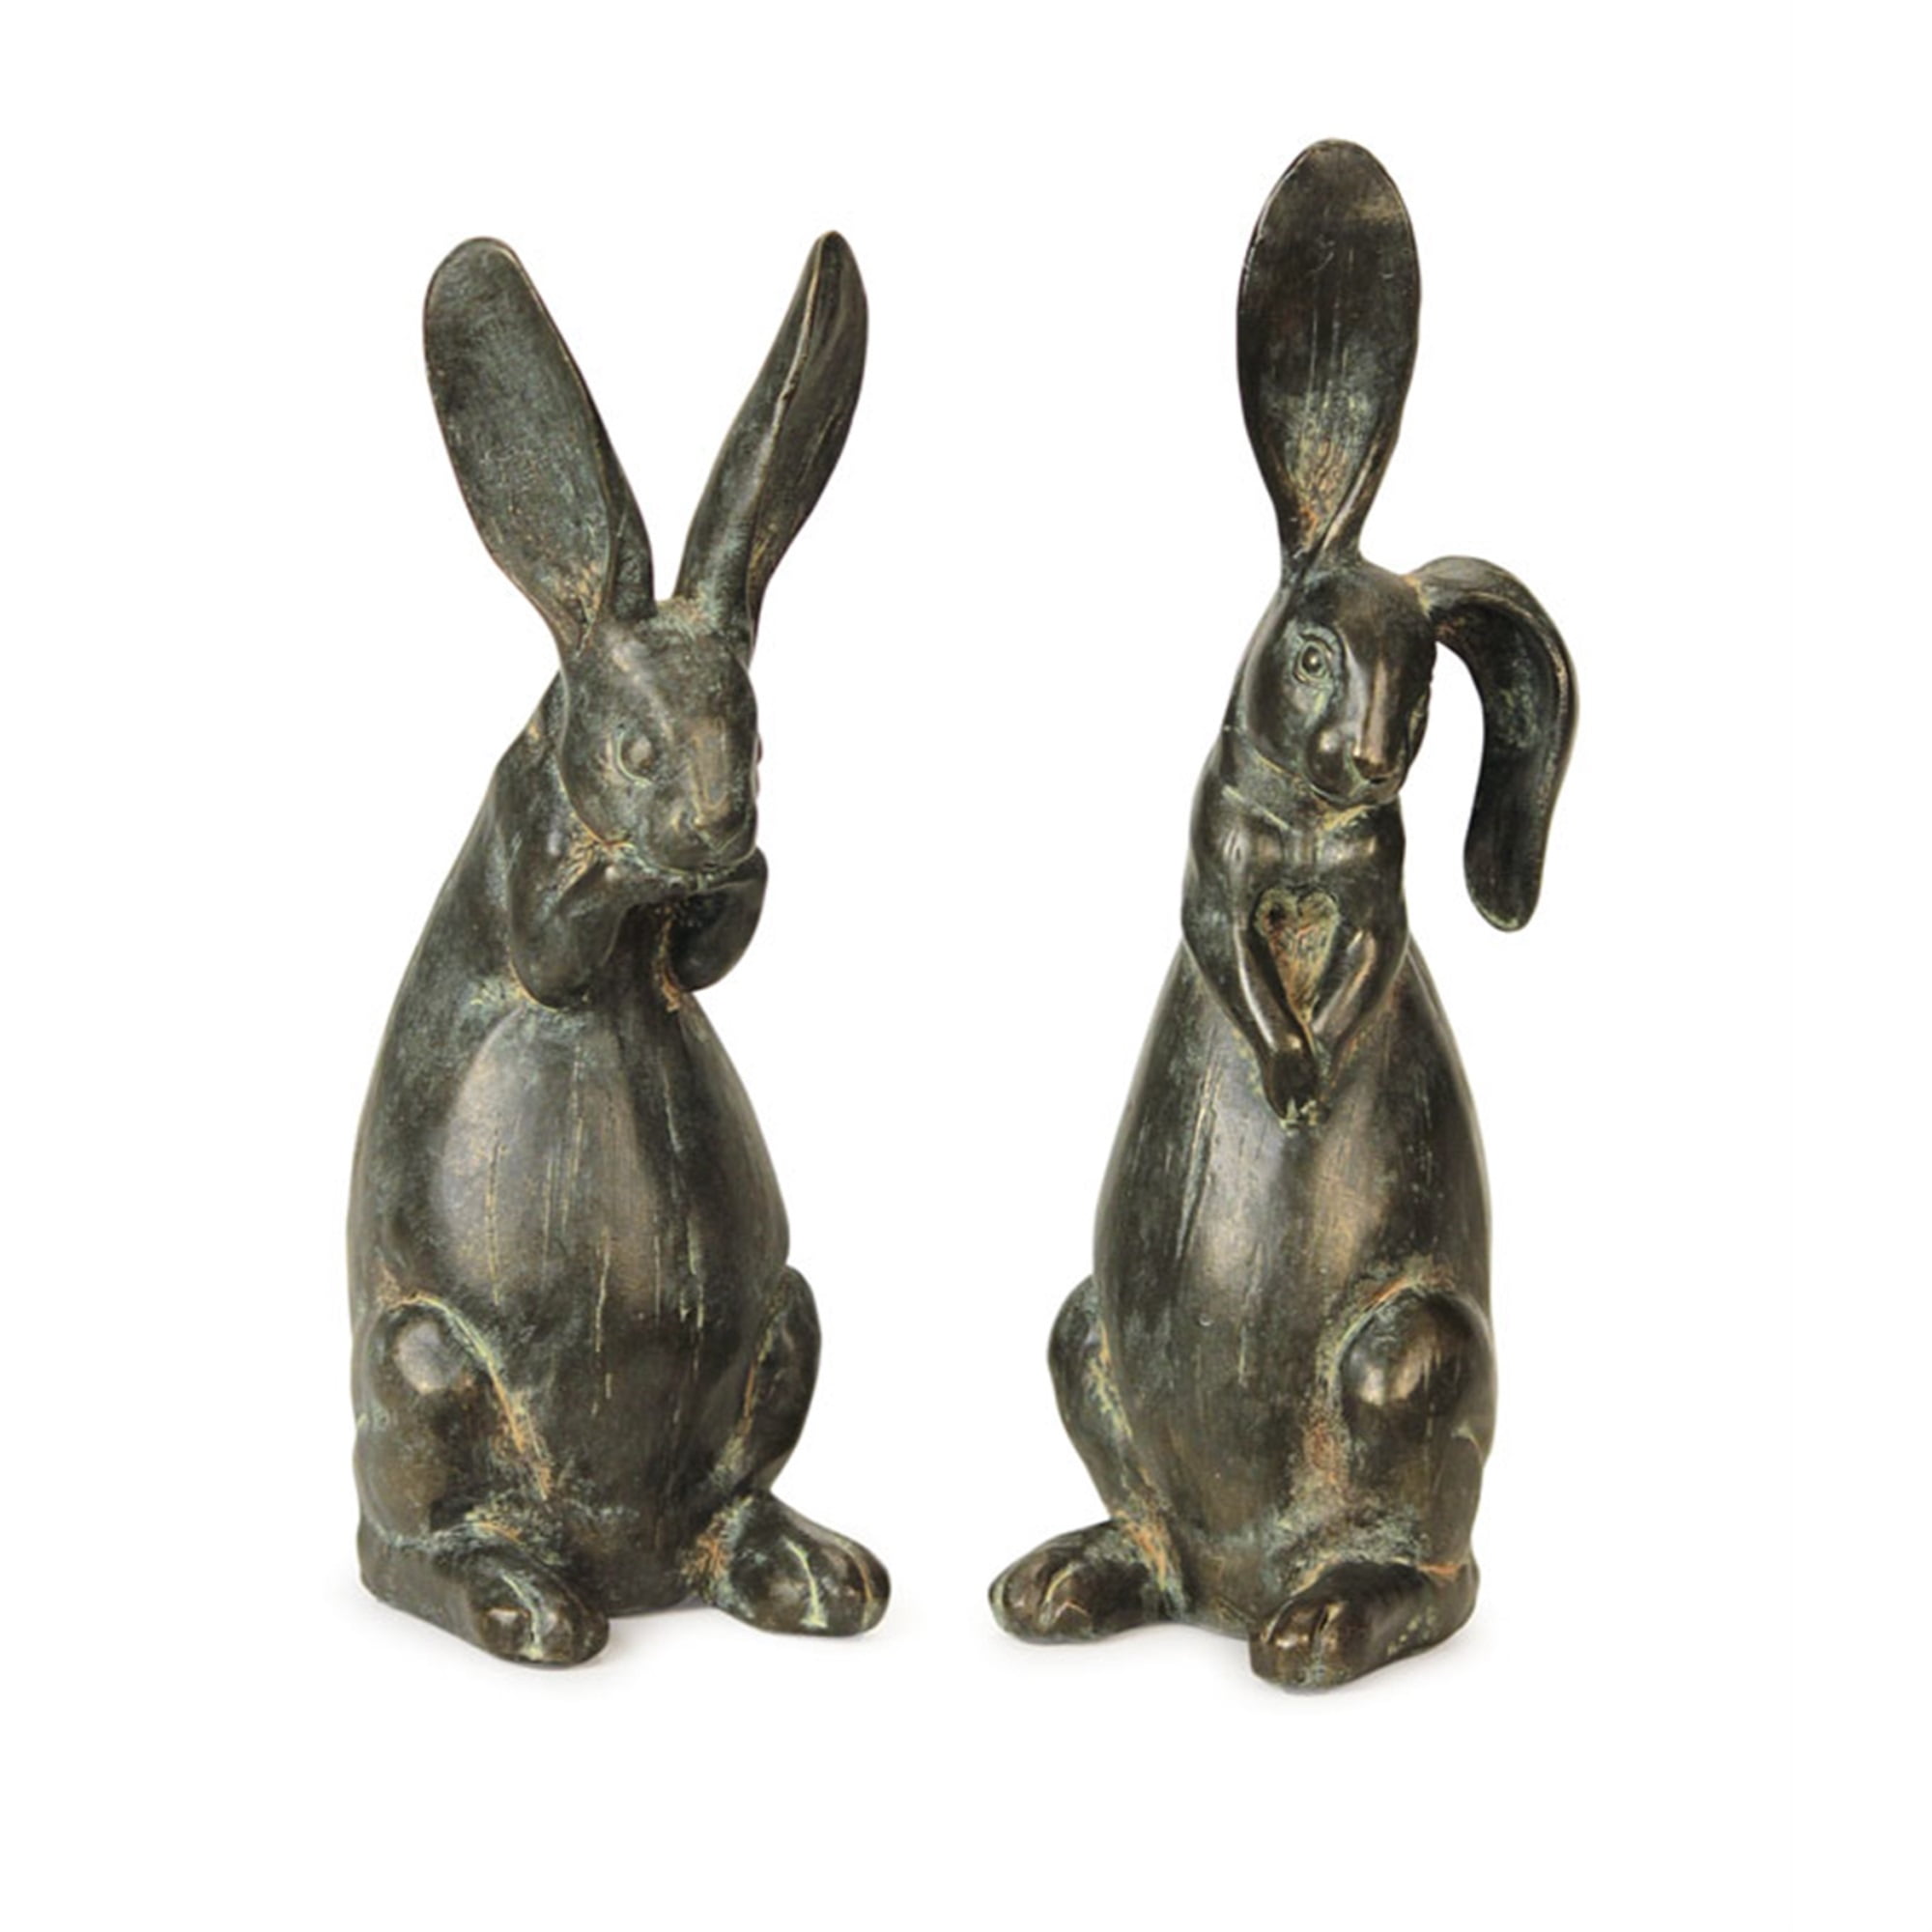 Floppy Eared Rabbits (Set of 2) 16.75"H Polystone